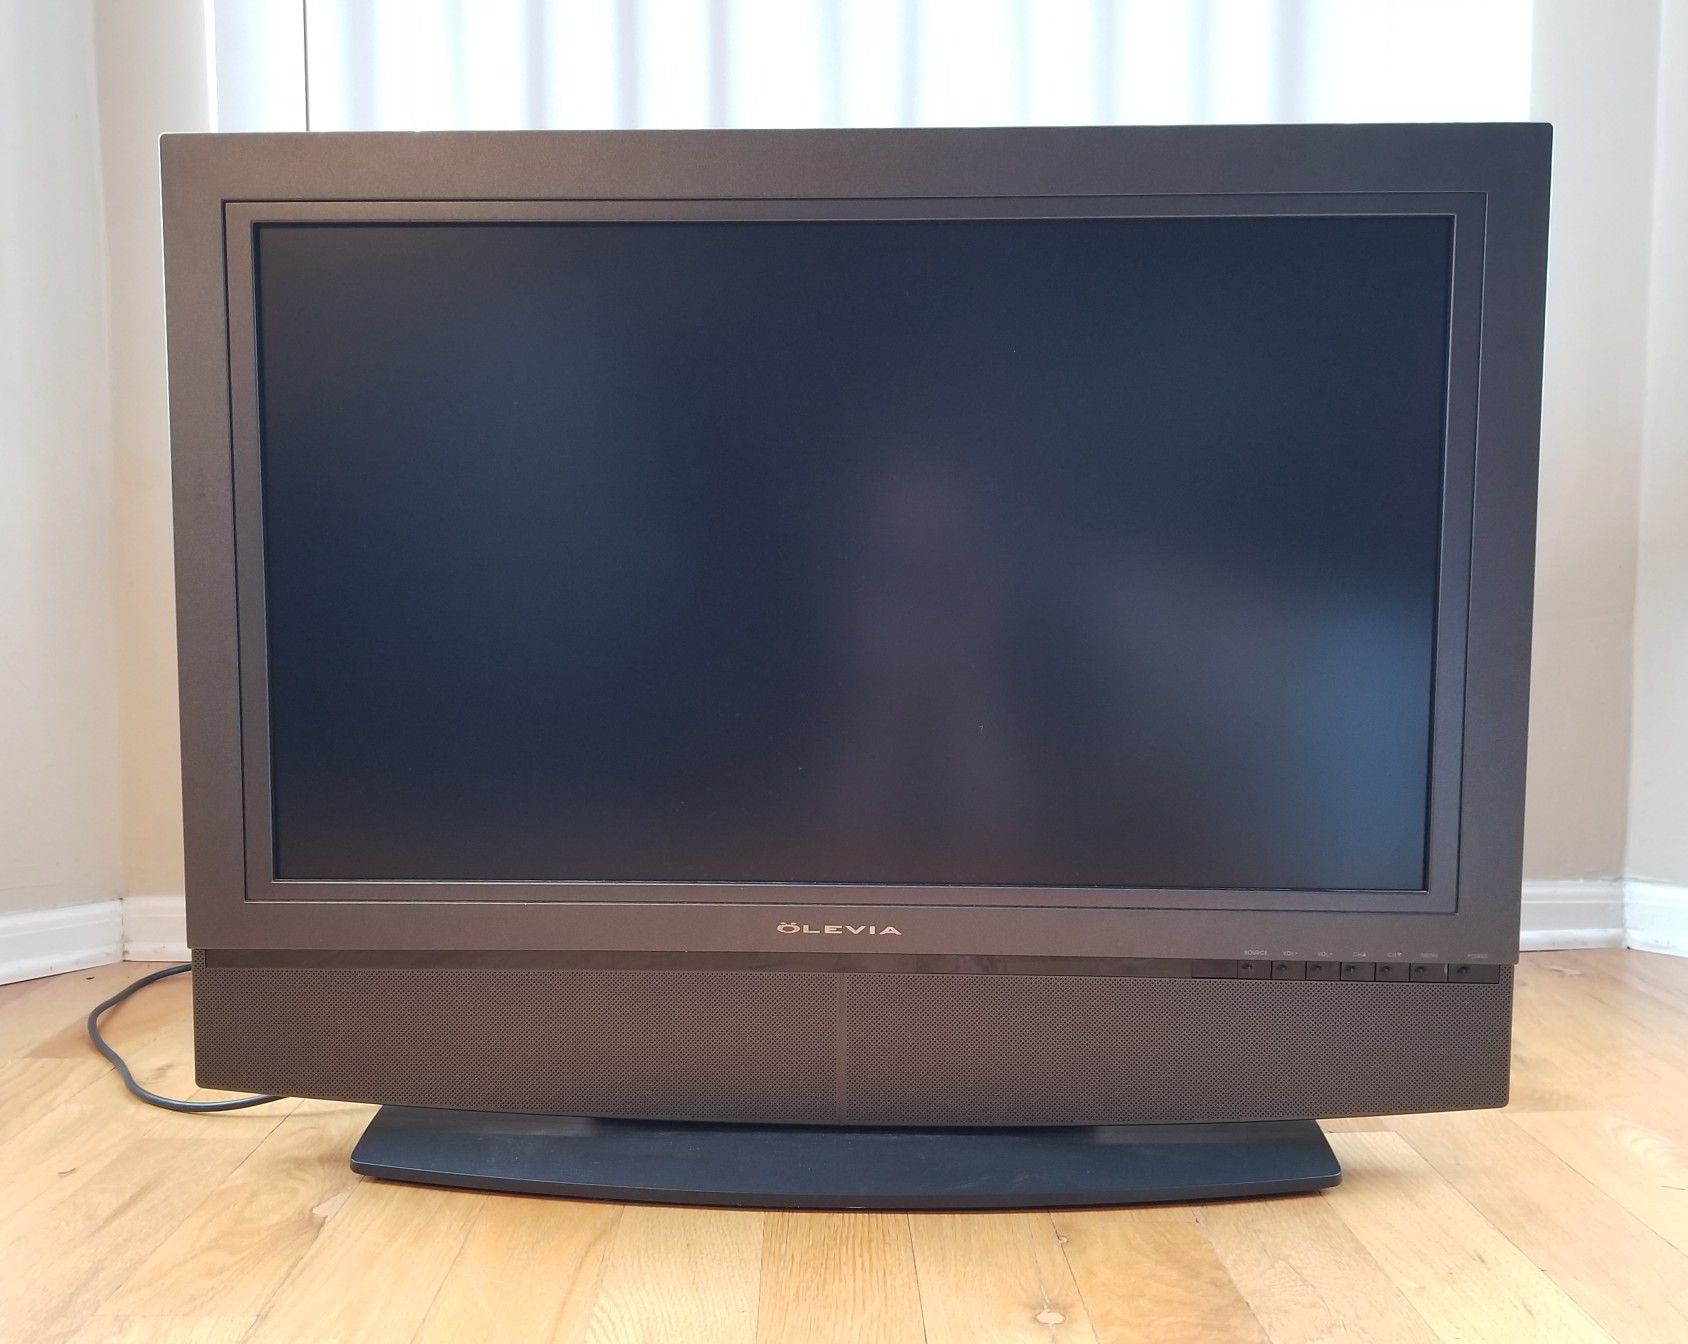 Olevia 31" Flatscreen TV w/remote